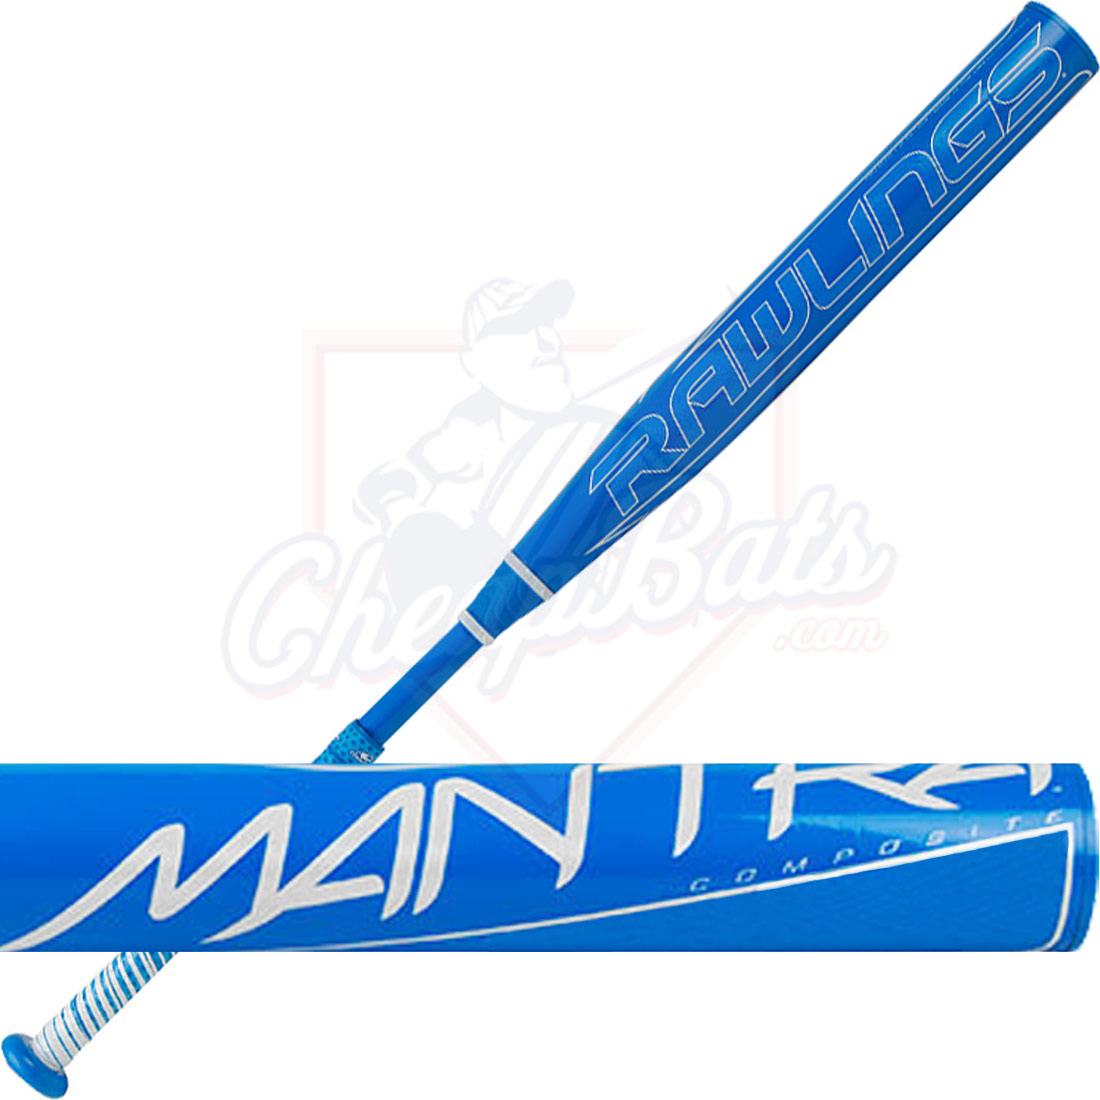 2021 Rawlings Mantra Fastpitch Softball Bat -10oz FP1M10